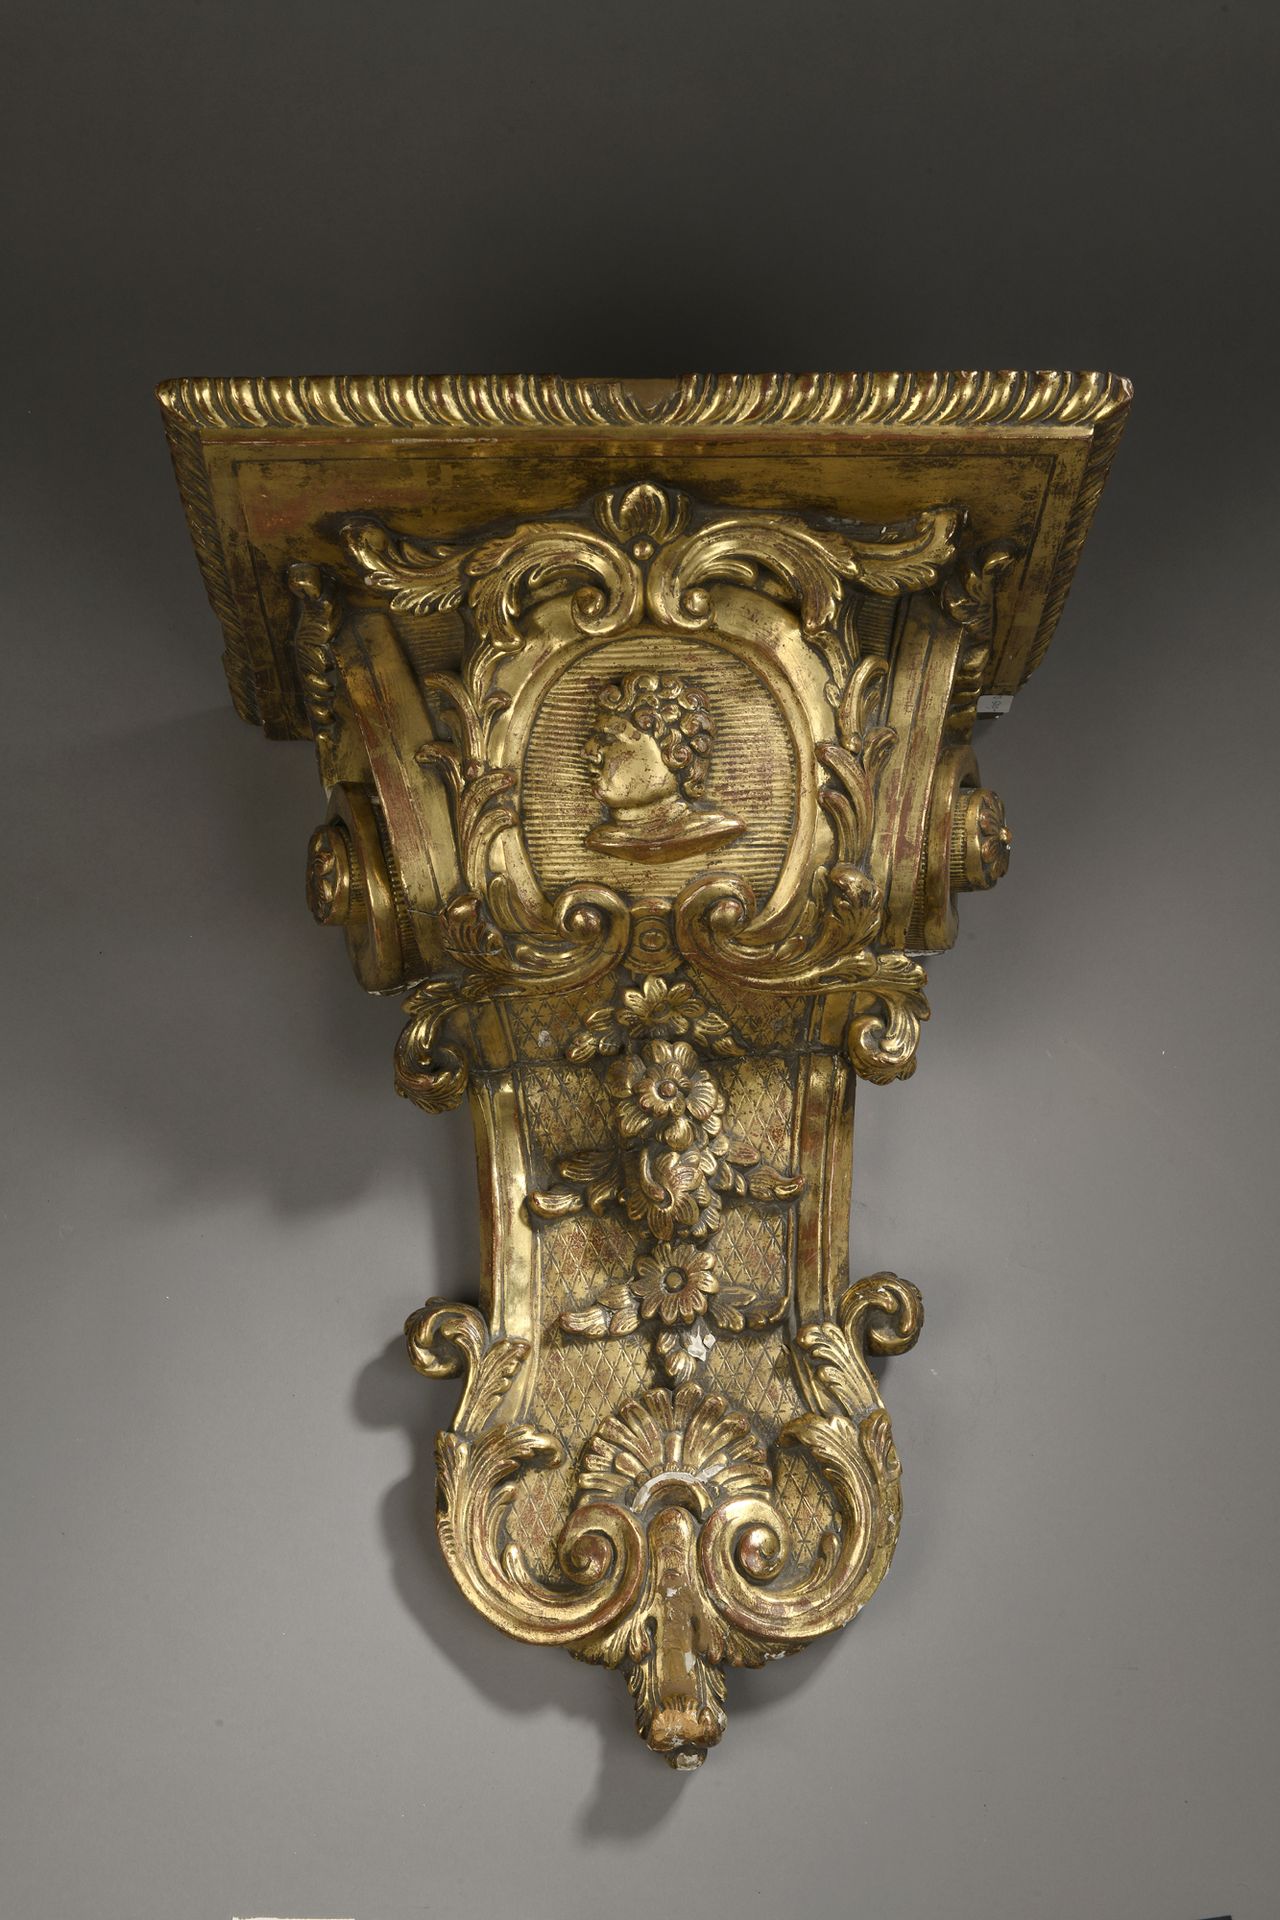 Null 木质镀金灰泥控制台，饰有卷轴、刺桐叶、羽毛、花朵和半身侧面像。
路易十四风格，拿破仑三世时期。
51 x 38 x 29 厘米